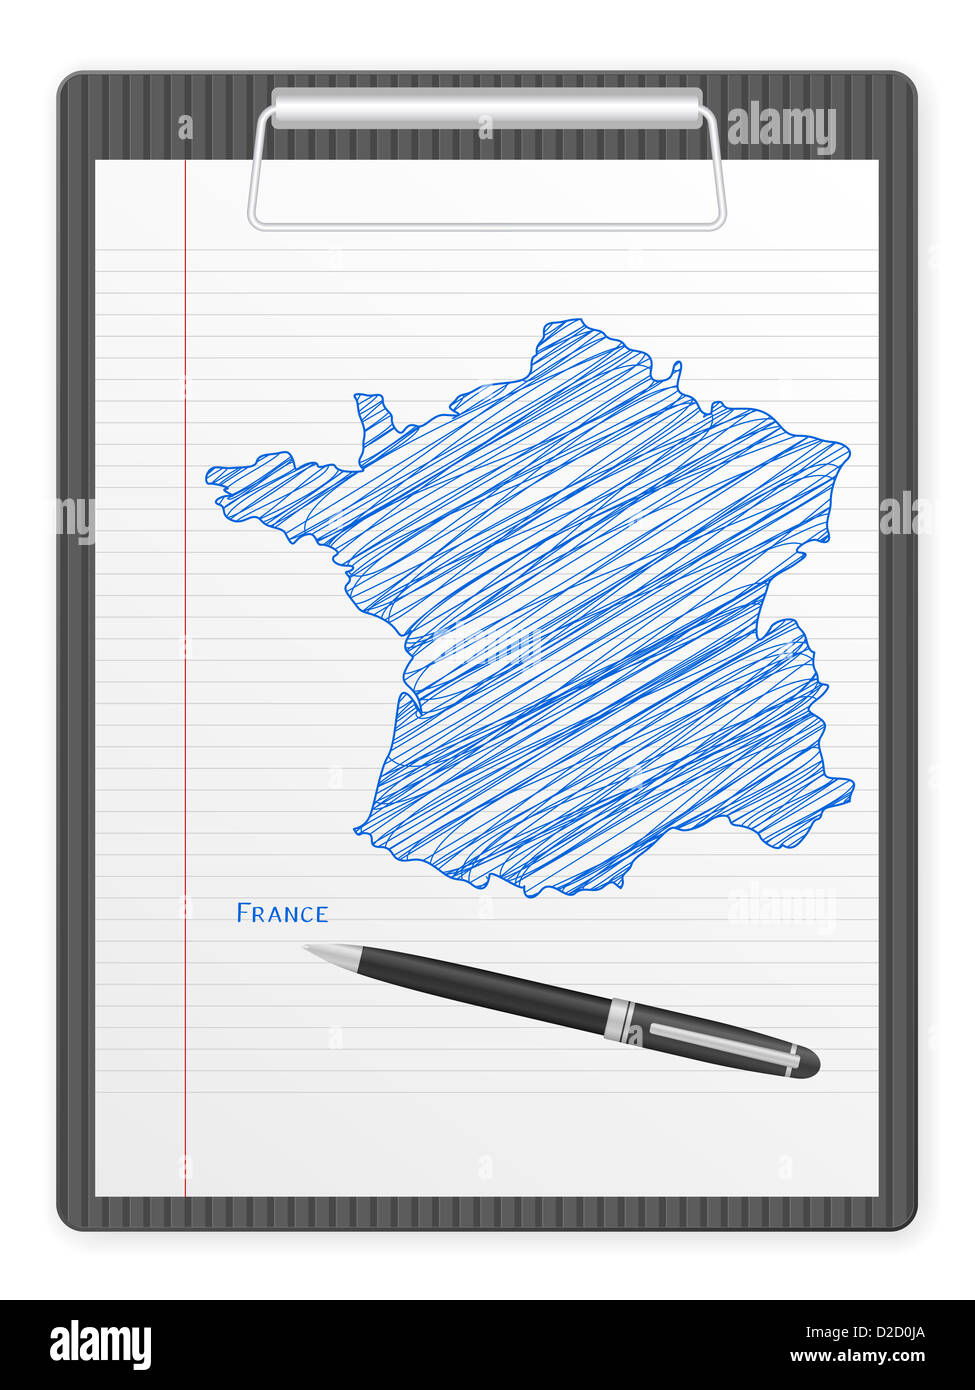 Portapapeles con Francia mapa de dibujo. Ilustración vectorial. Foto de stock